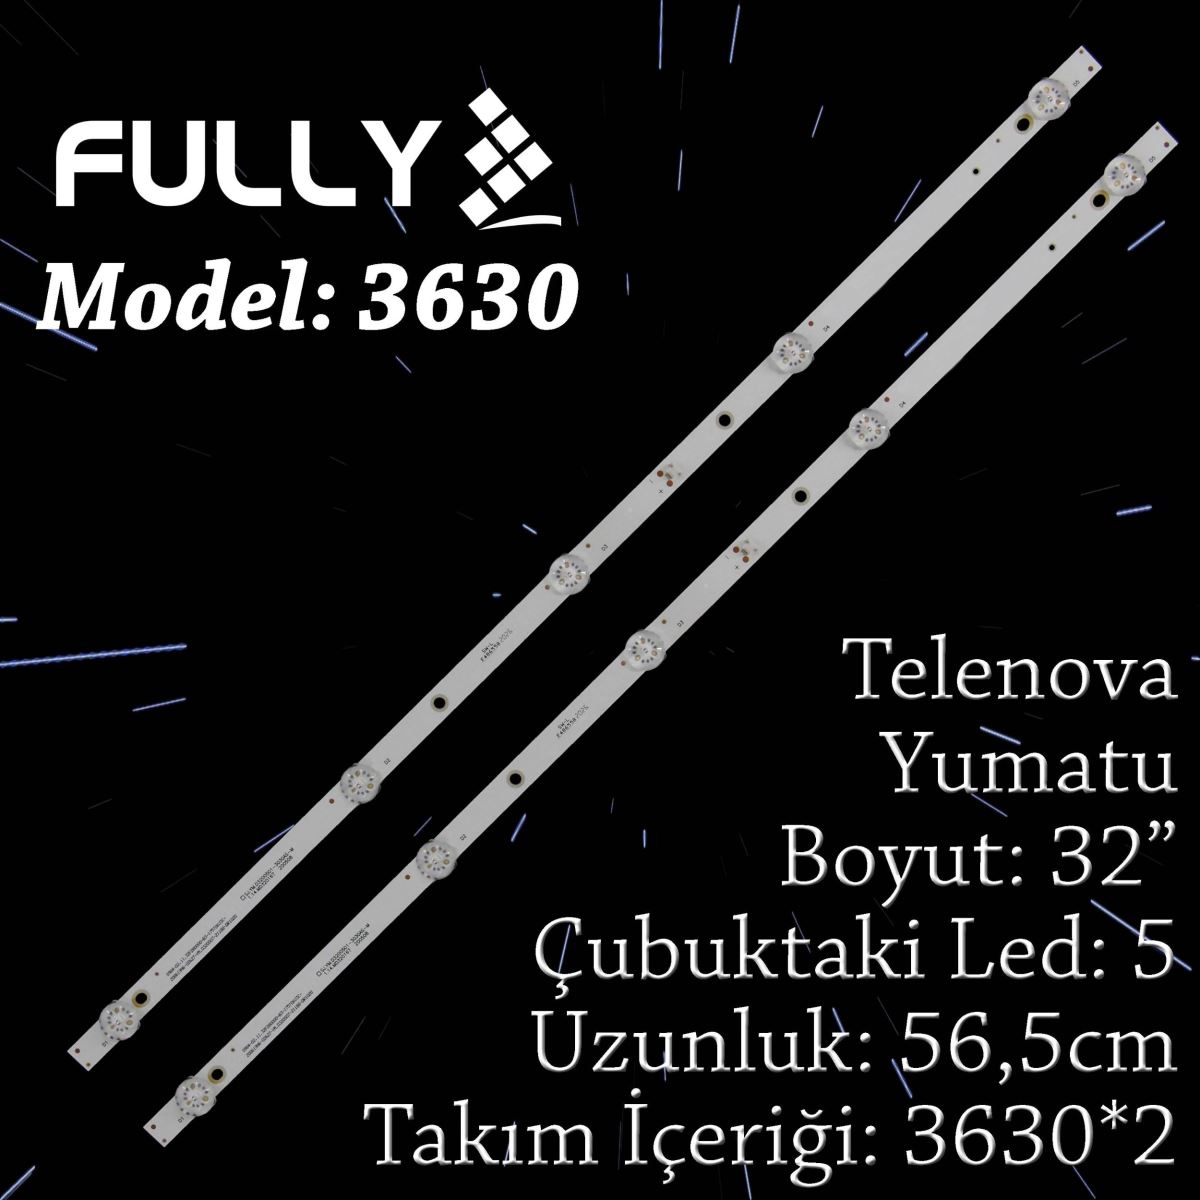 FULLY-SET-3630 YUMATU TELENOVA 32 INC , SJ.YM.D3200501-3030AS-M, 1.14.MD320167